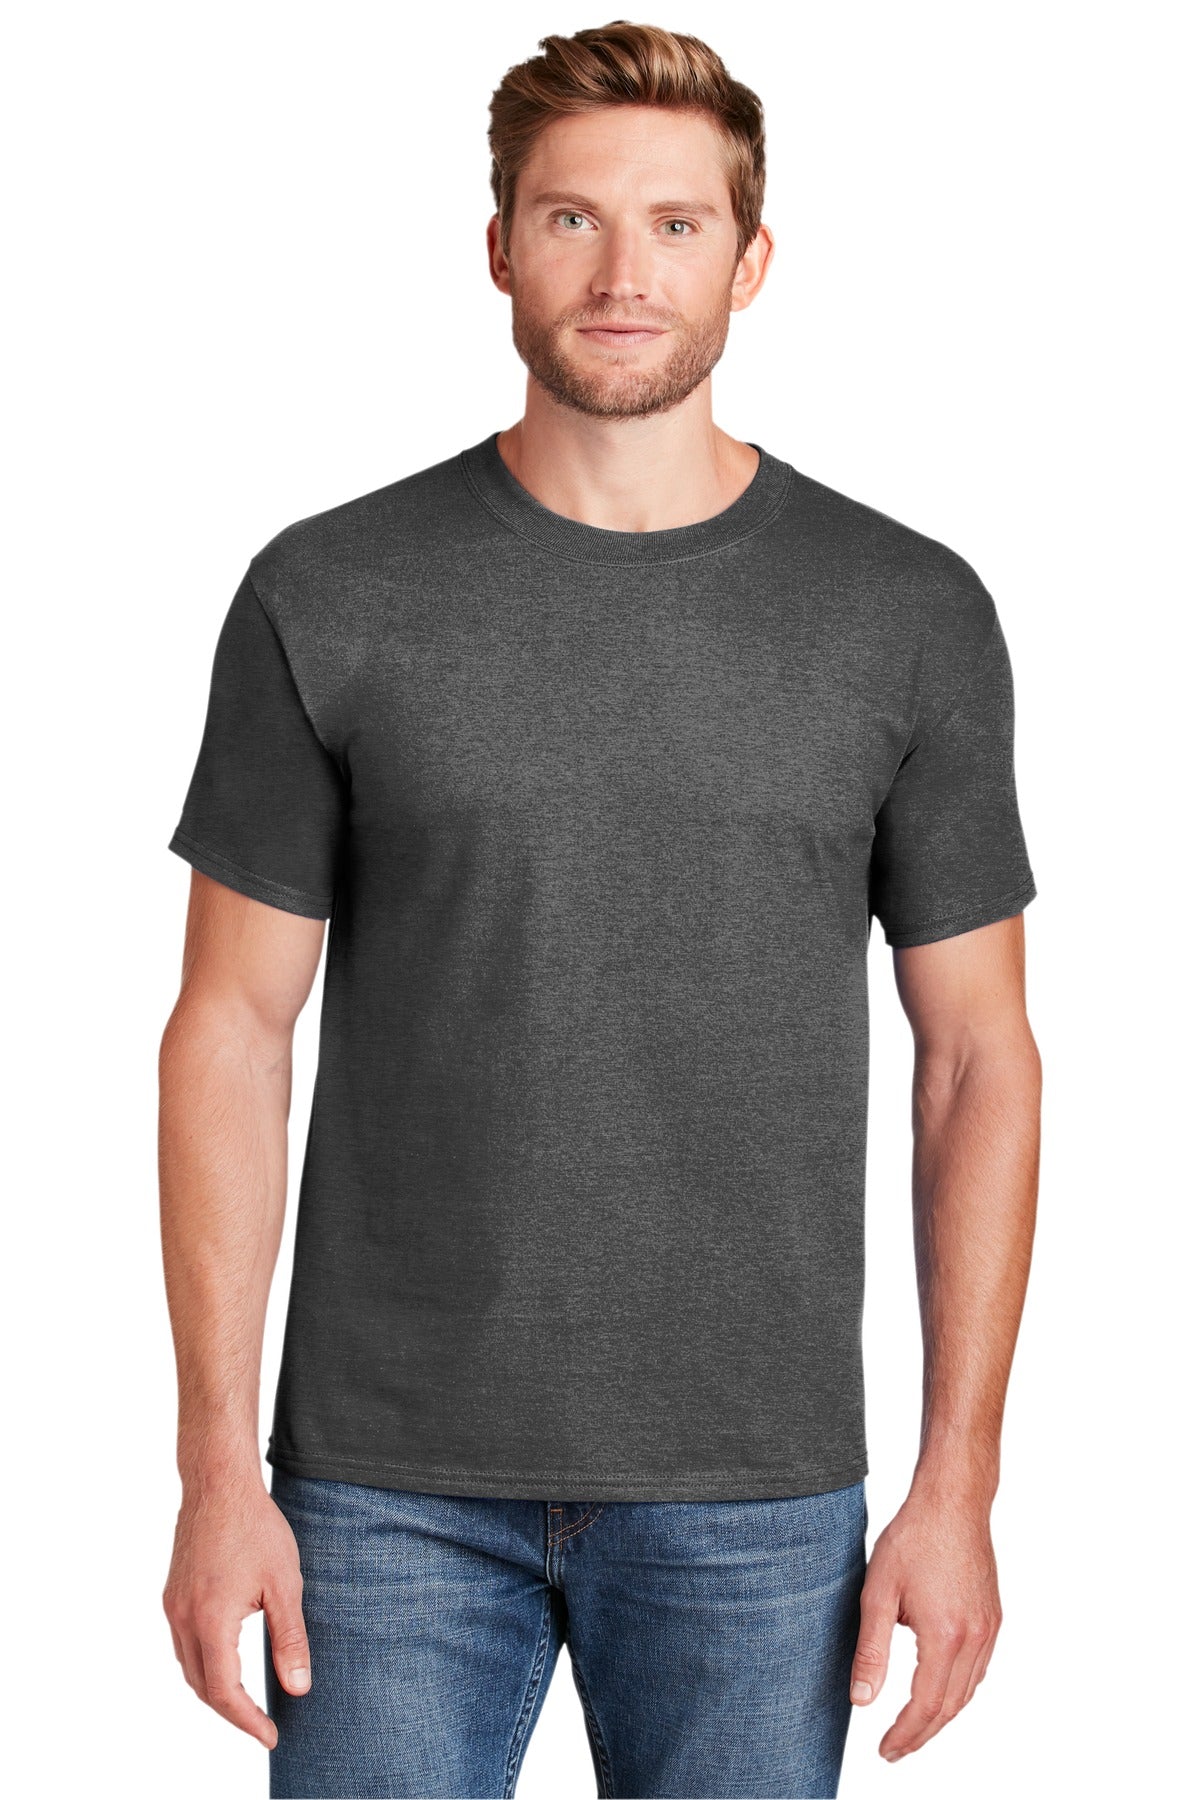 T-Shirts Oxford Grey Hanes